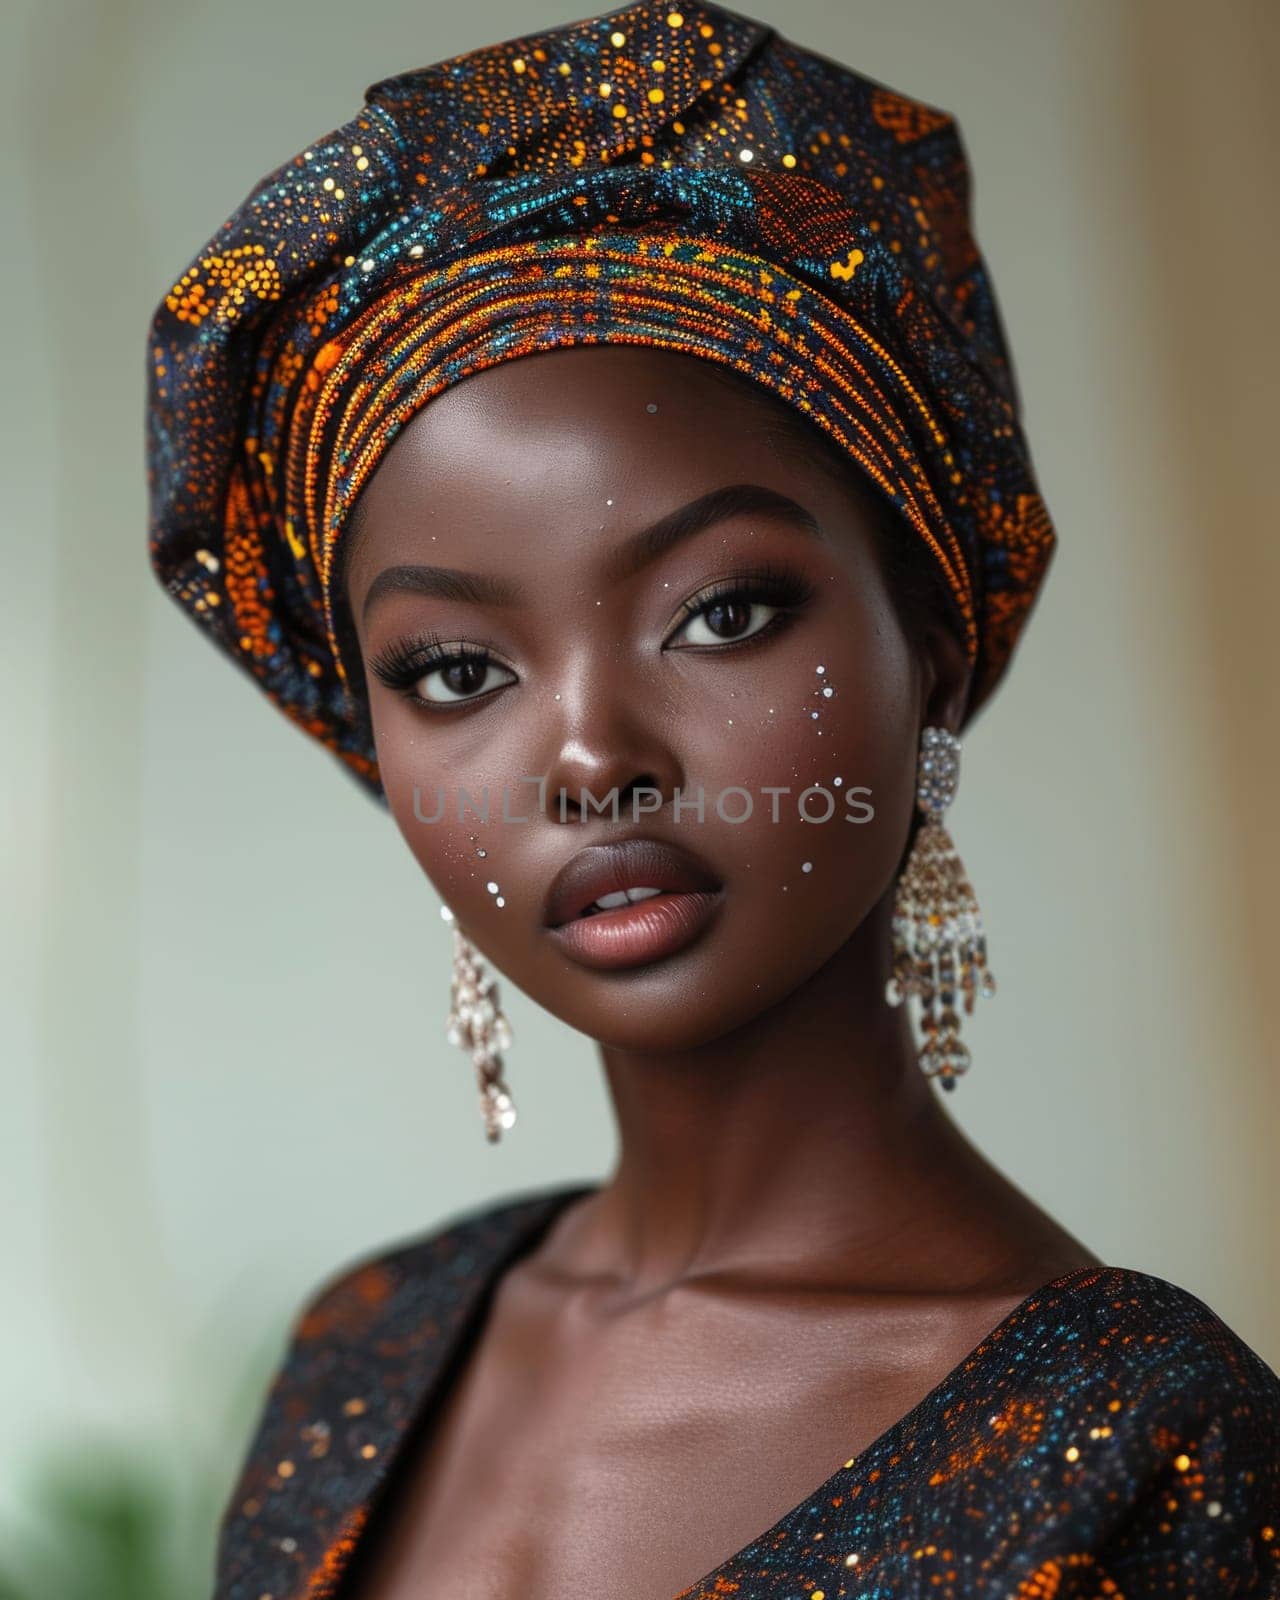 Elegant African American Woman in Impressive Turban in Portrait.